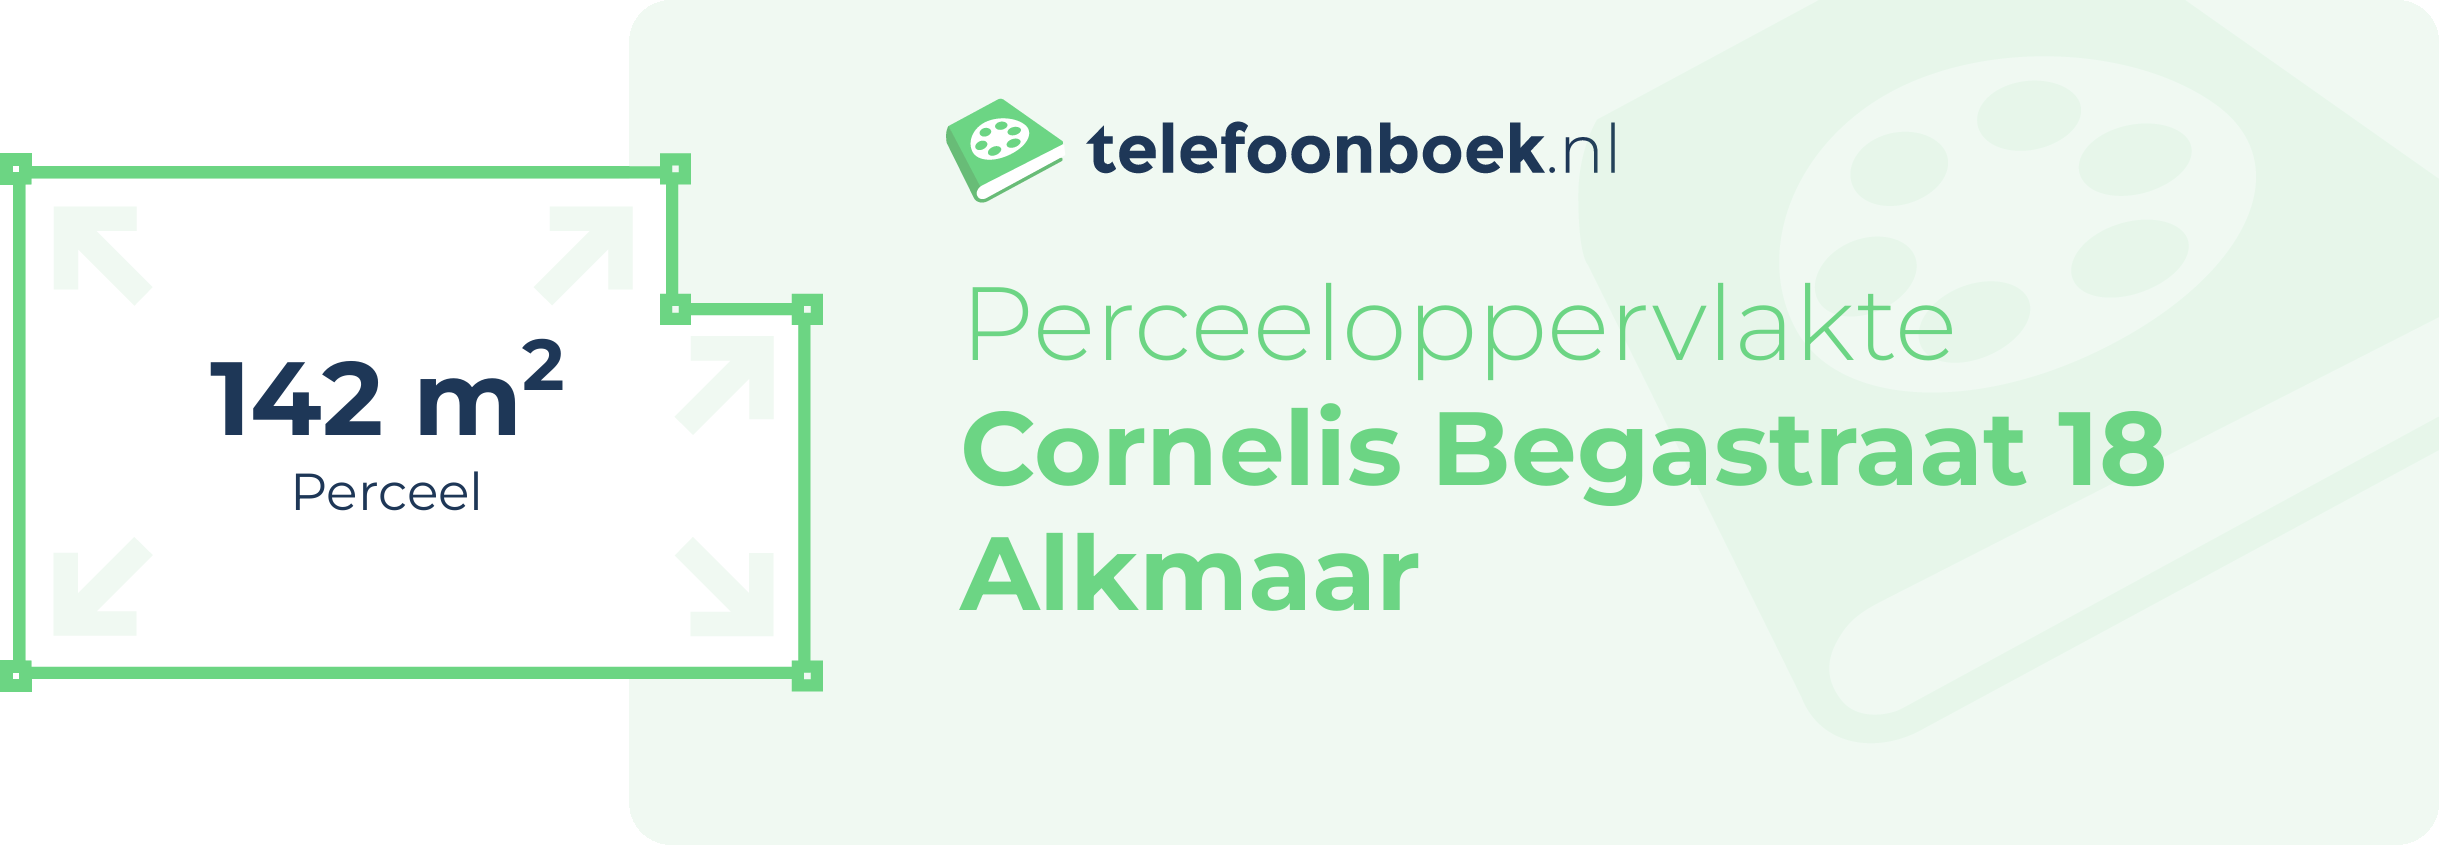 Perceeloppervlakte Cornelis Begastraat 18 Alkmaar